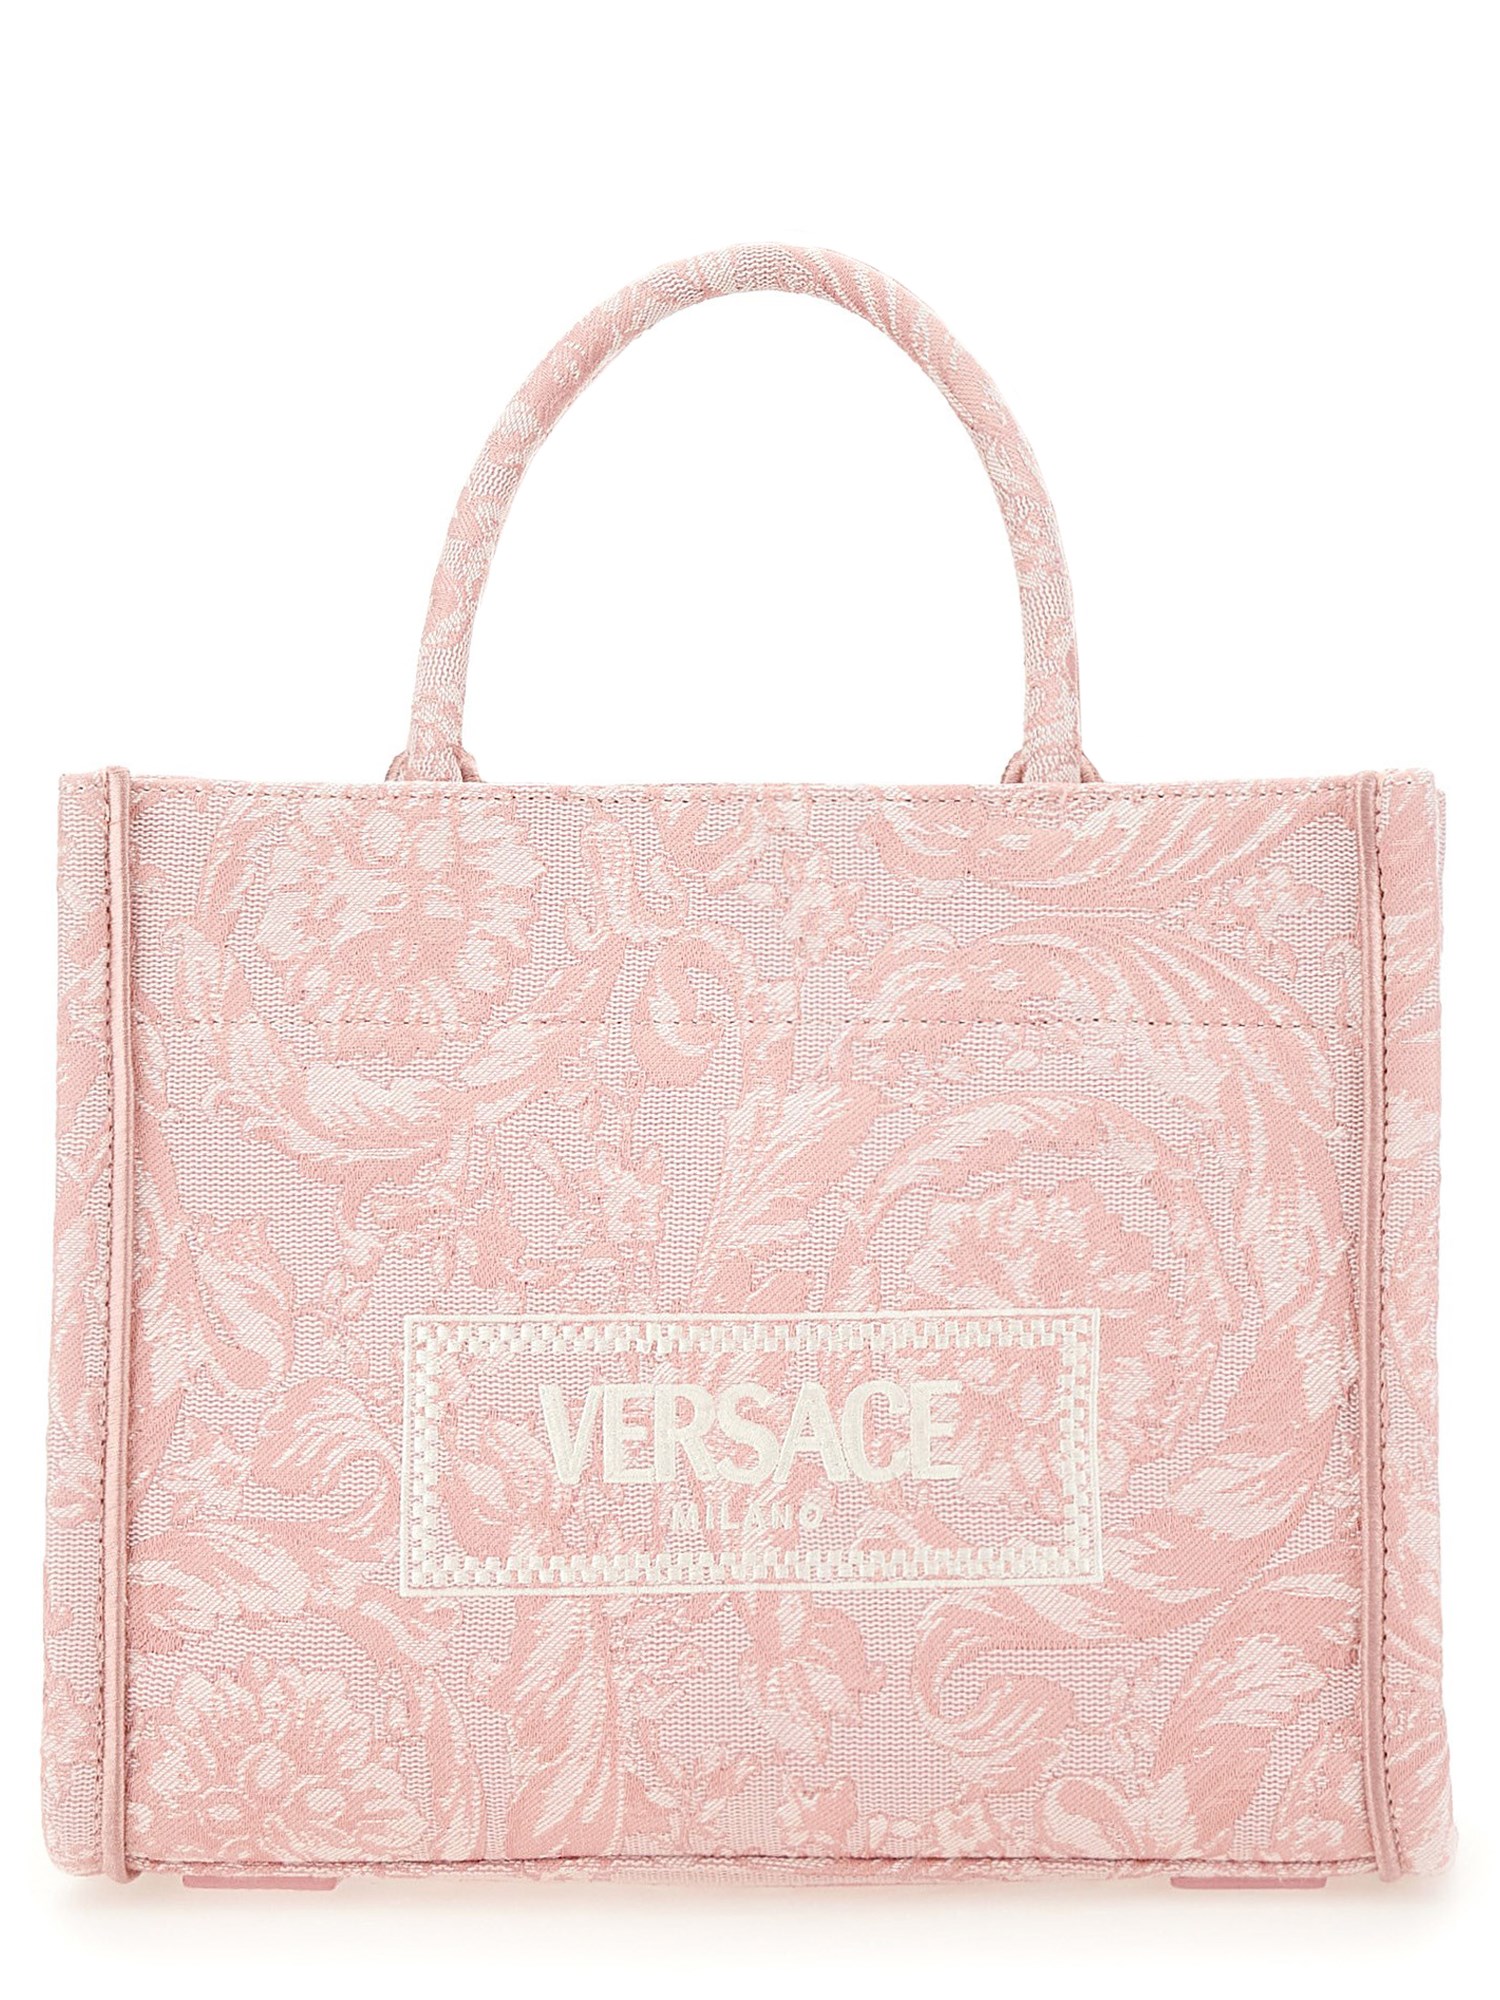 versace shopper bag 